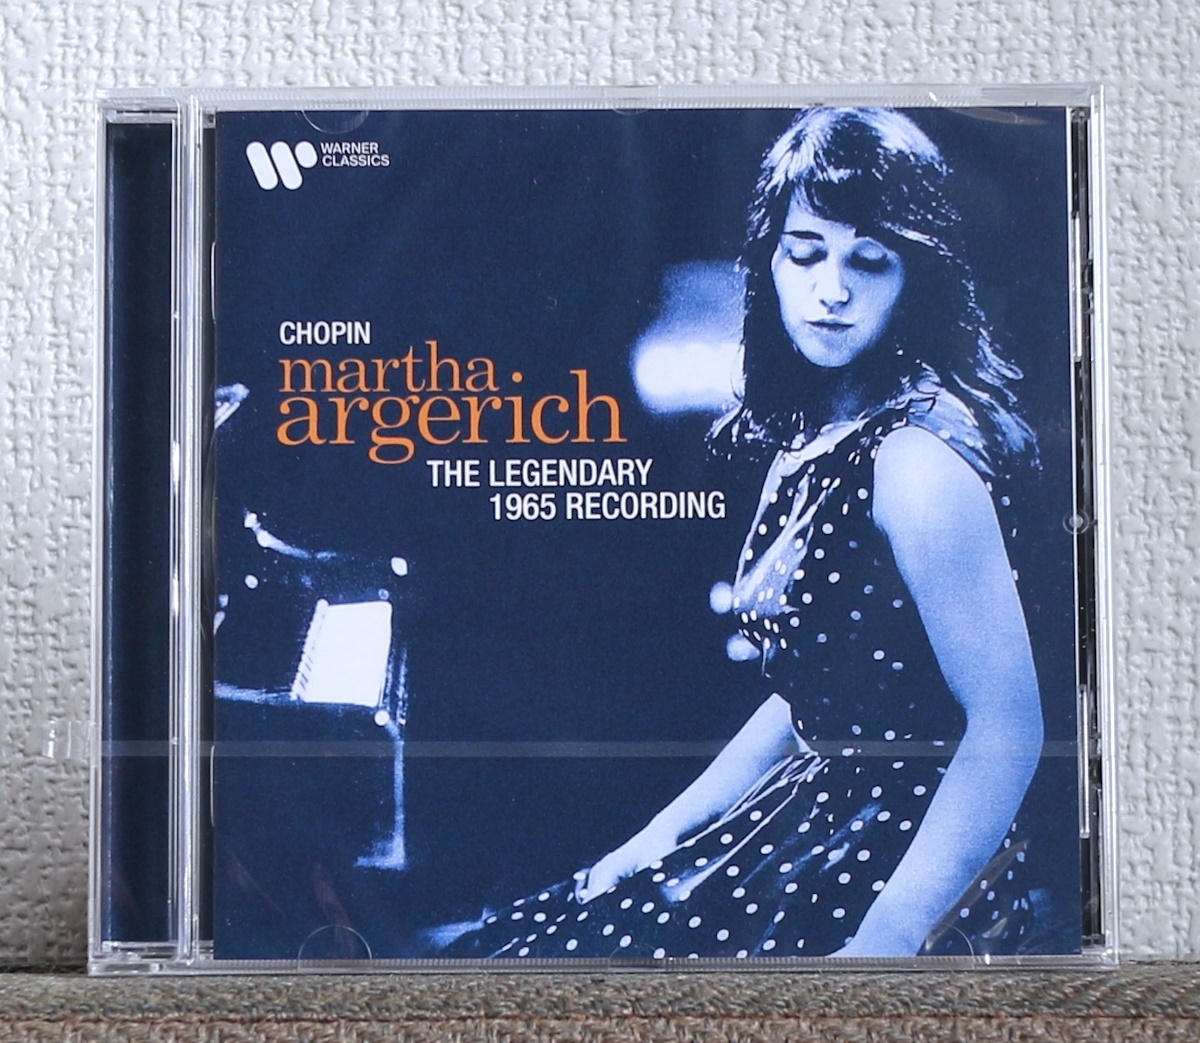 CD/高音質リマスター/アルゲリッチ/ショパン/Argerich/Chopin/The Legendary 1965 Recording/Newly remastered in 192kHz/24-bit/ピアノの画像1